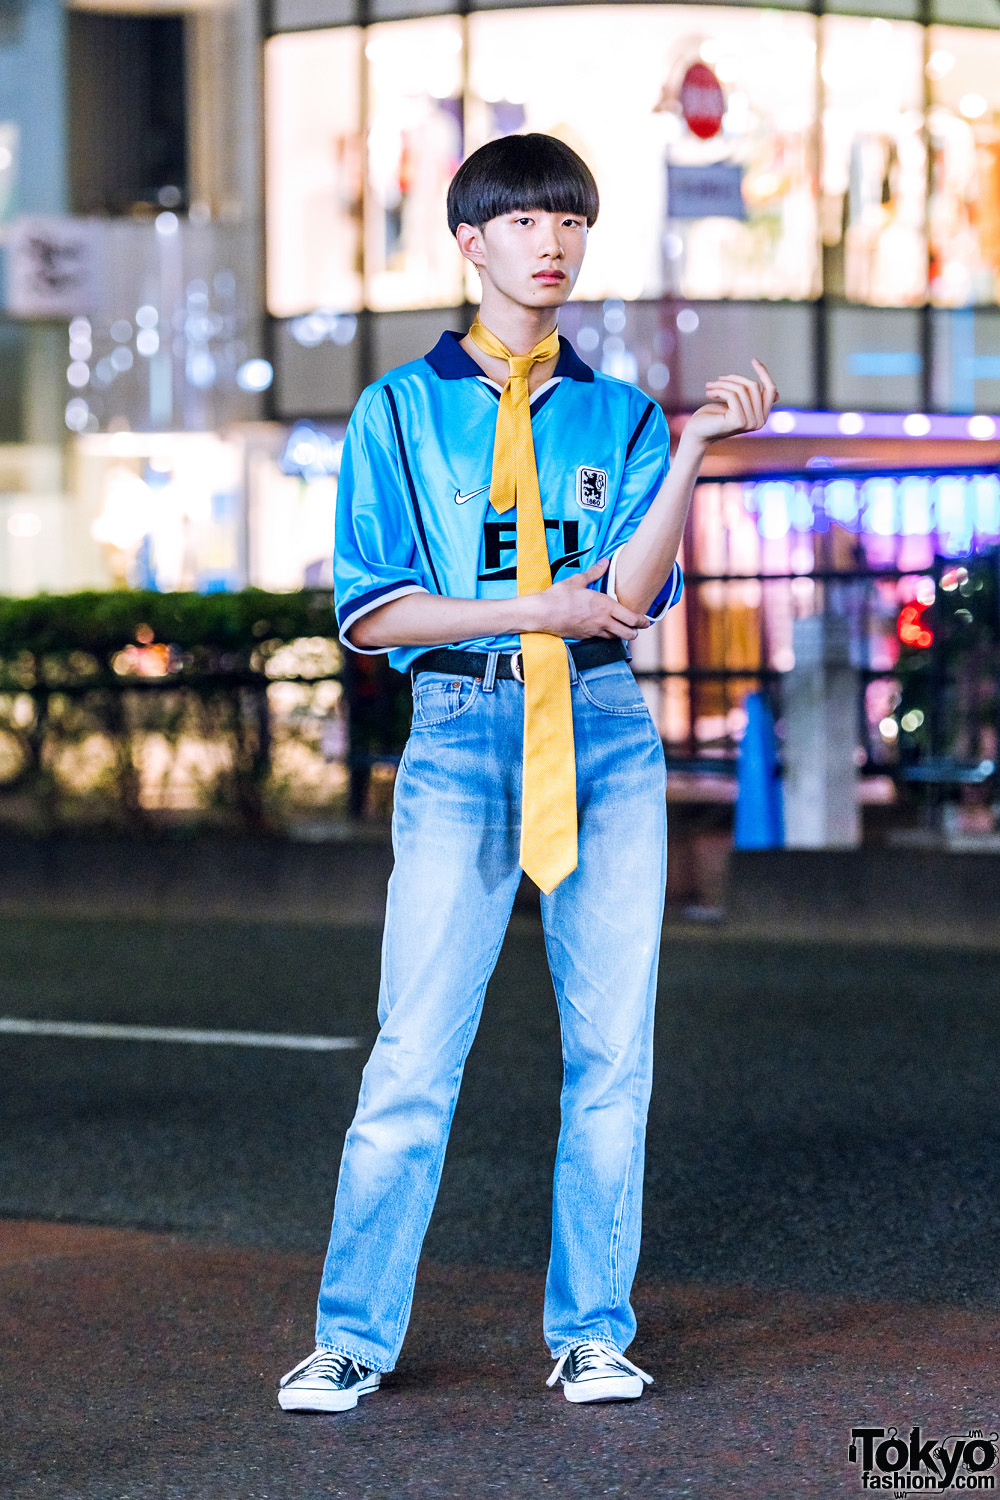 Sporty Casual Street Style in Harajuku w/ Nike 1860 Munchen Football Sports Jersey, Levi's Jeans, Converse Sneakers, CDG Belt & Necktie